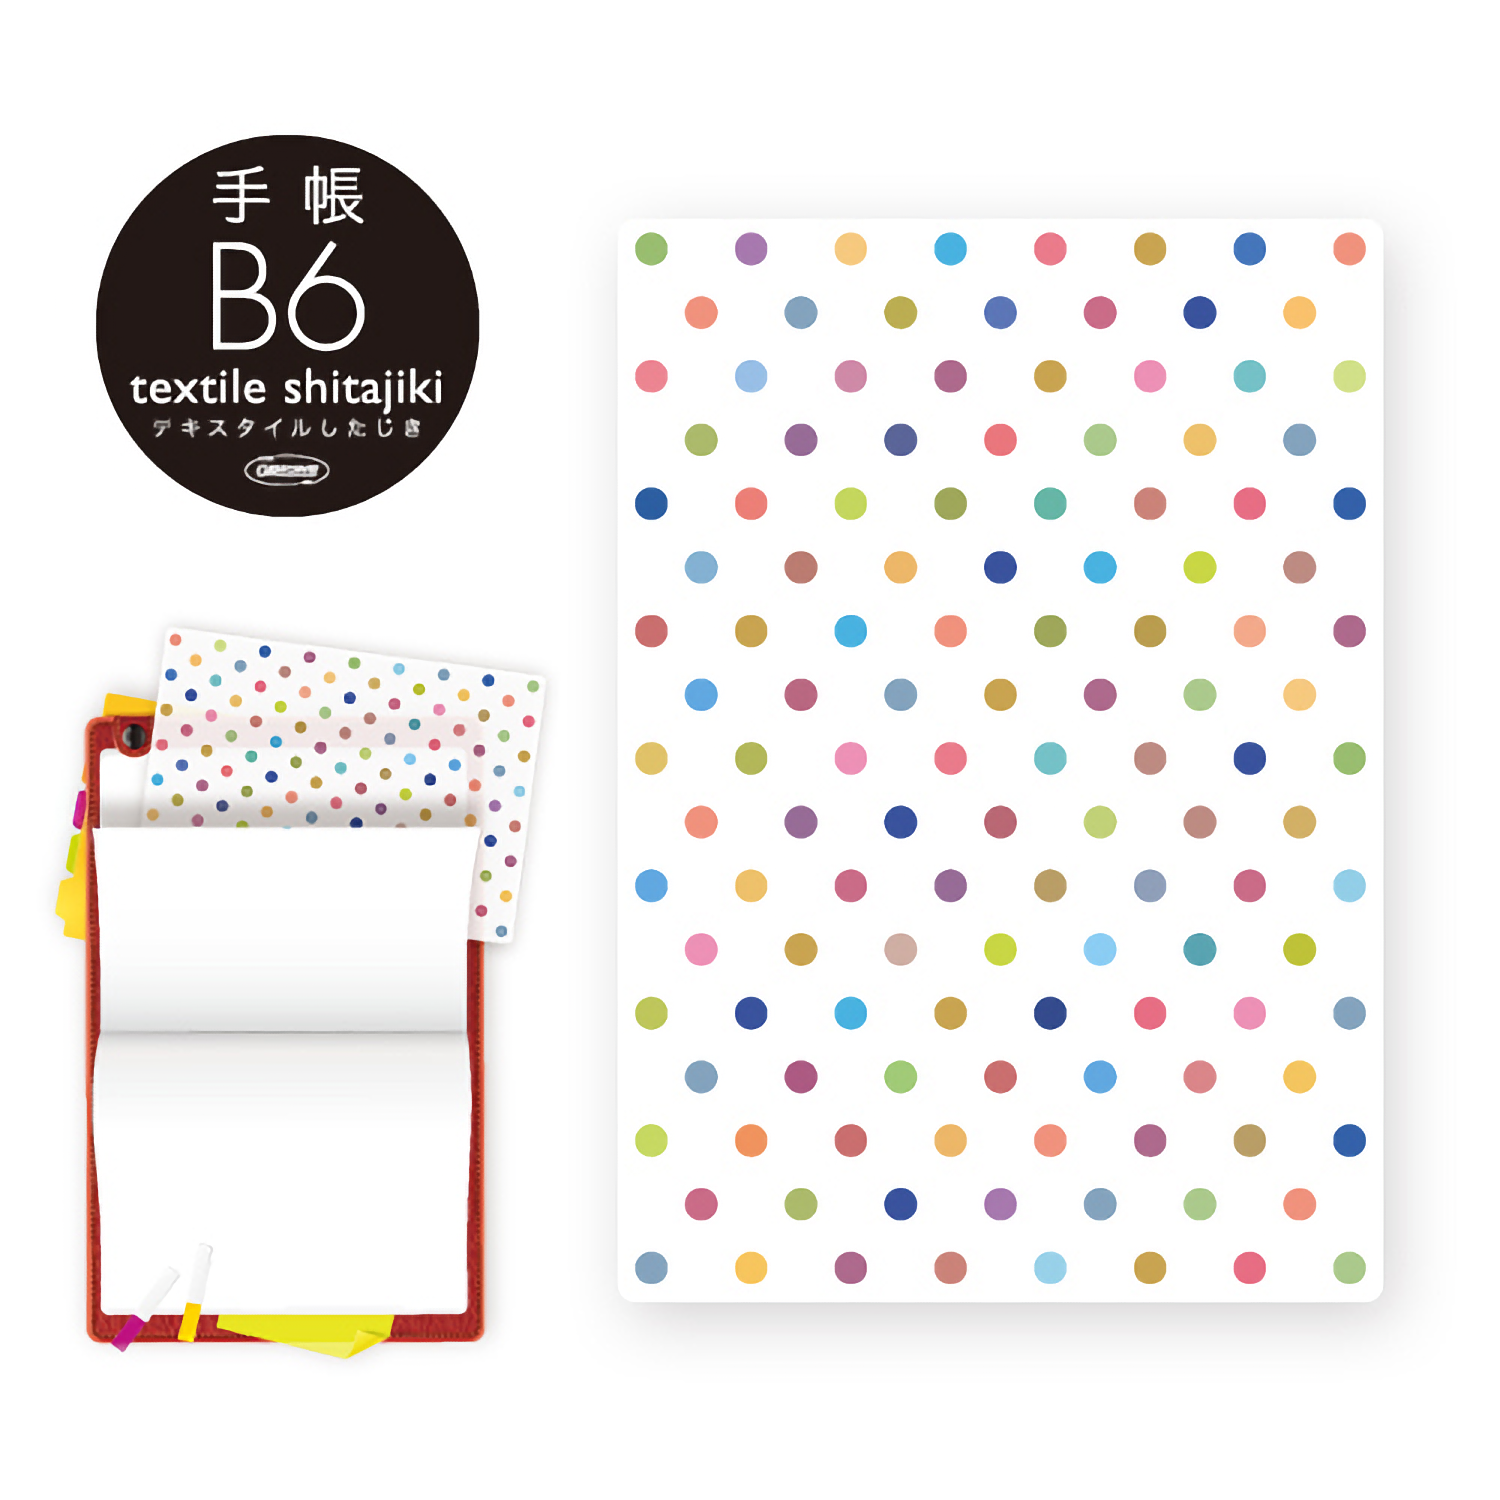 Kyoei Orions Shitajiki Pencil Board B6 - Design 02